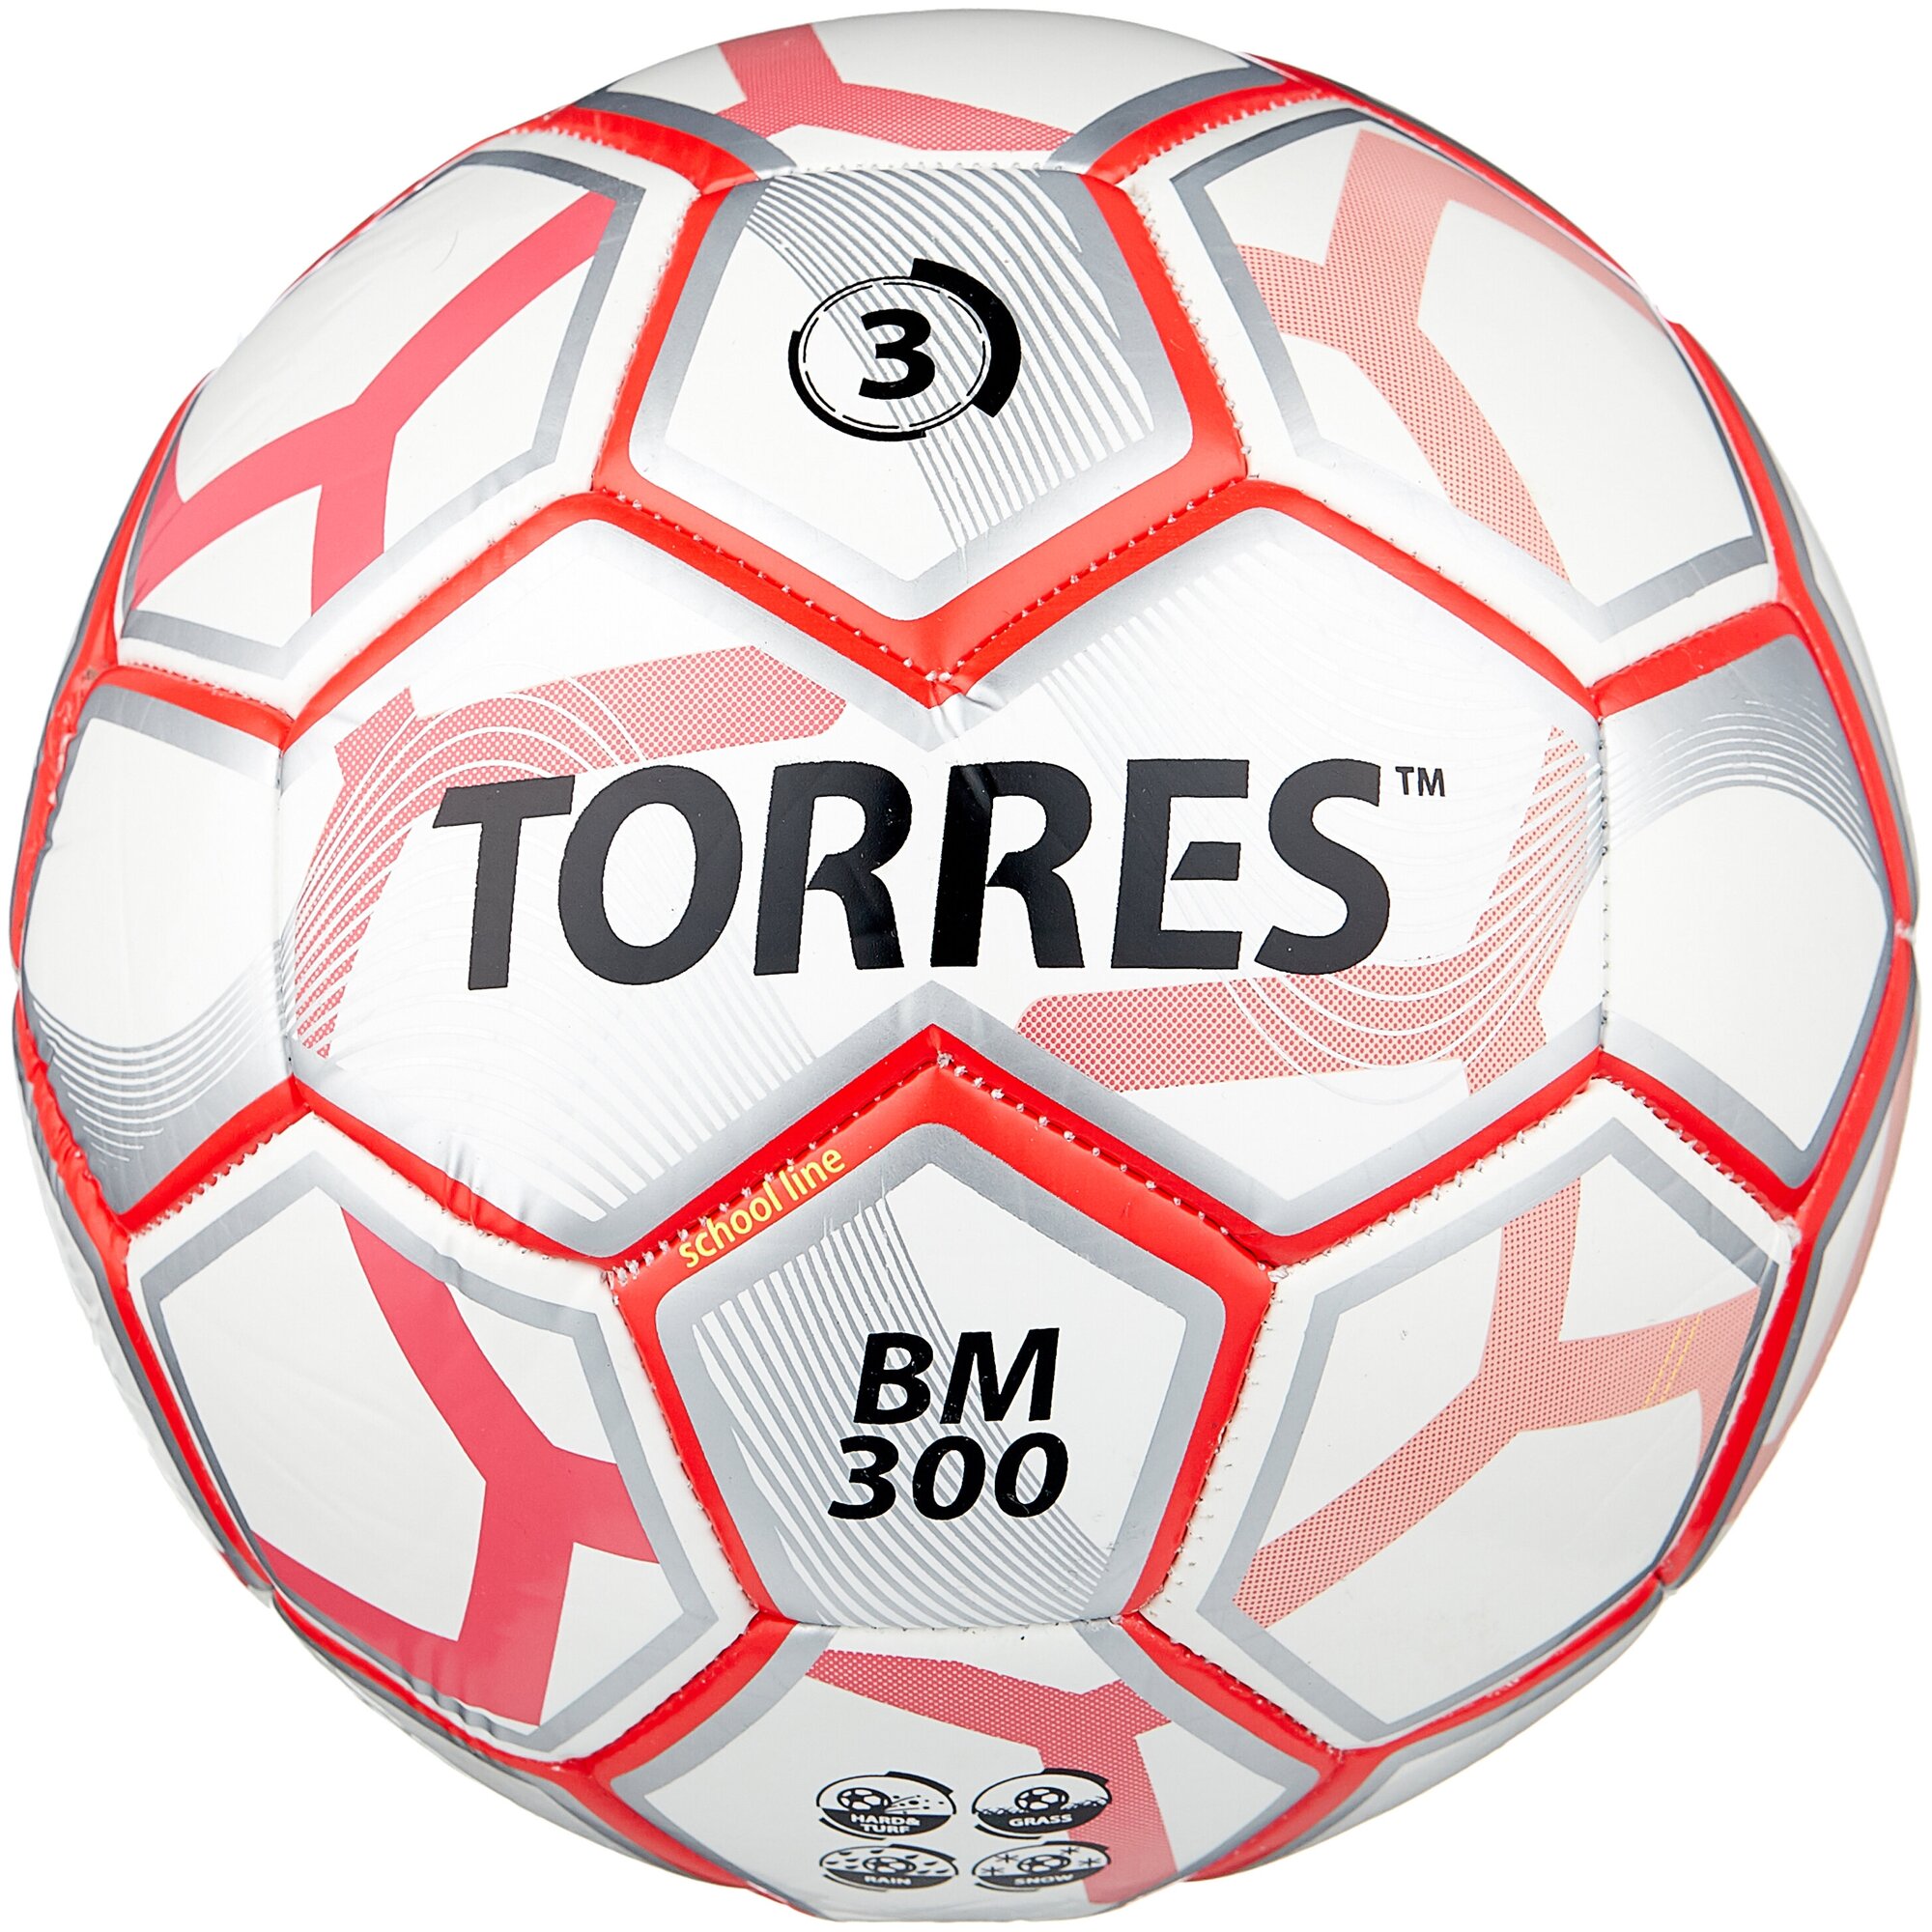   Torres BM 300 .F30743 .3